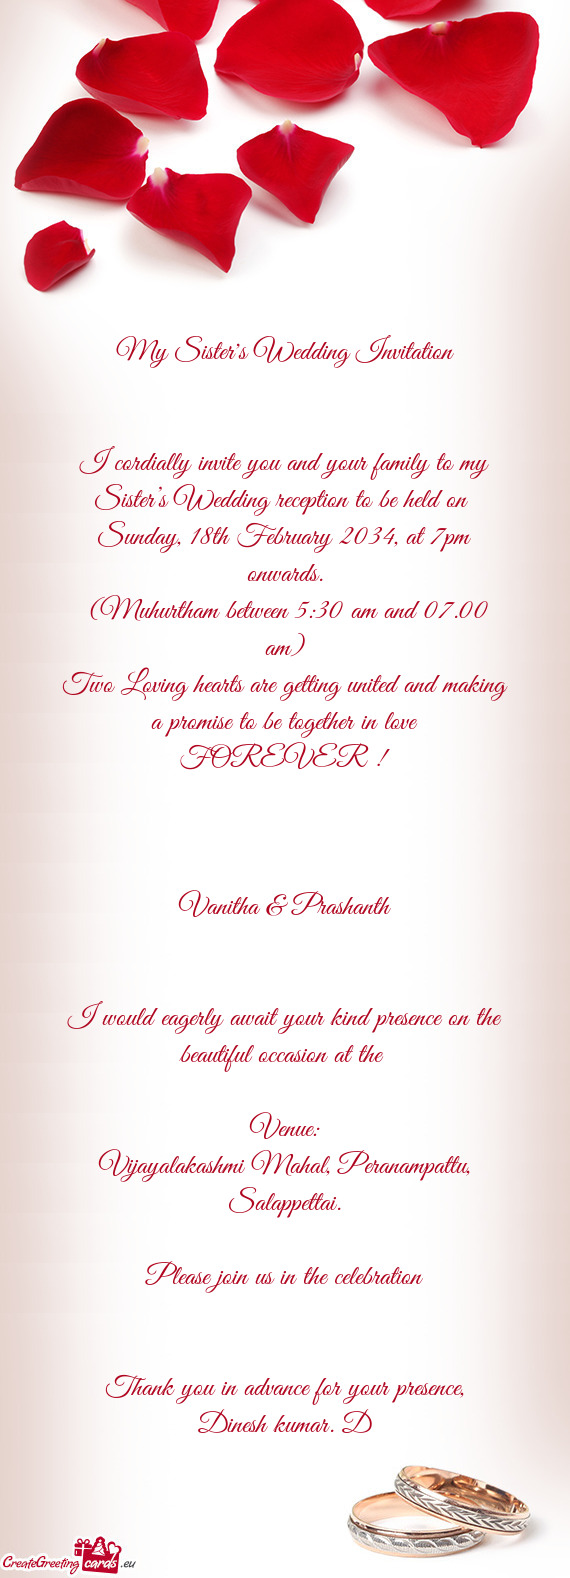 Sunday, 18th February 2034, at 7pm onwards